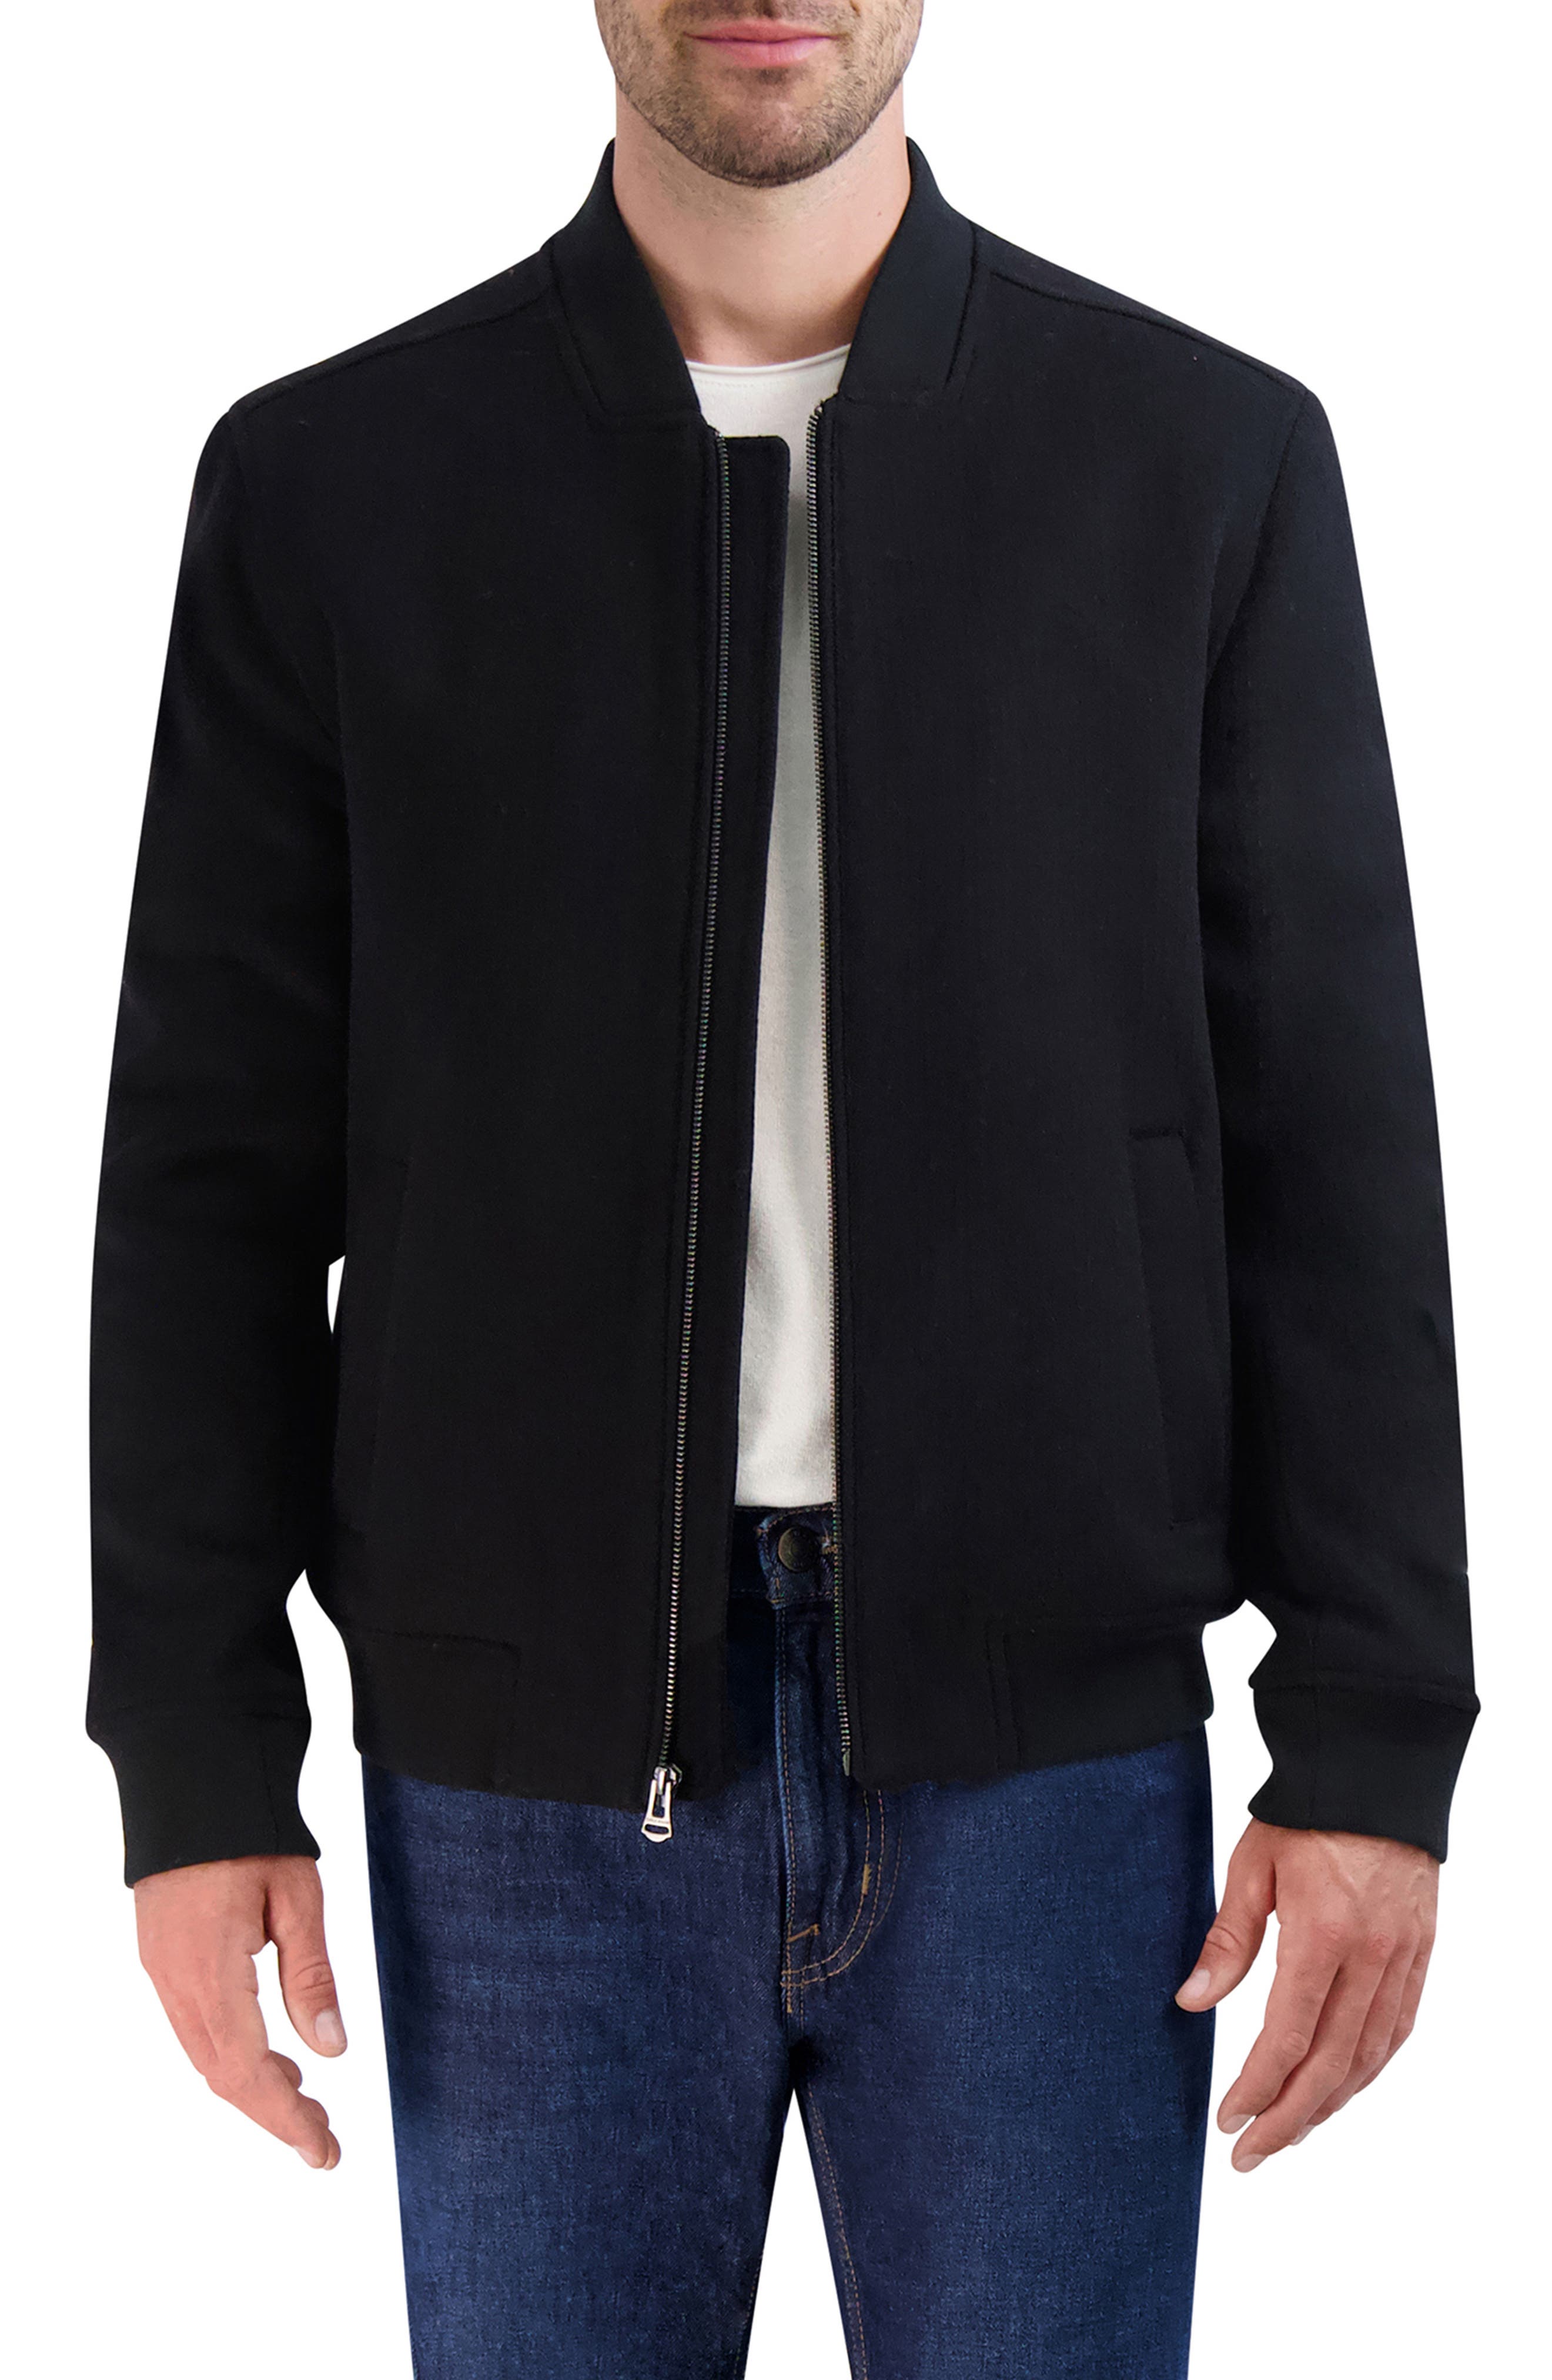 Wool-blend bomber jacket